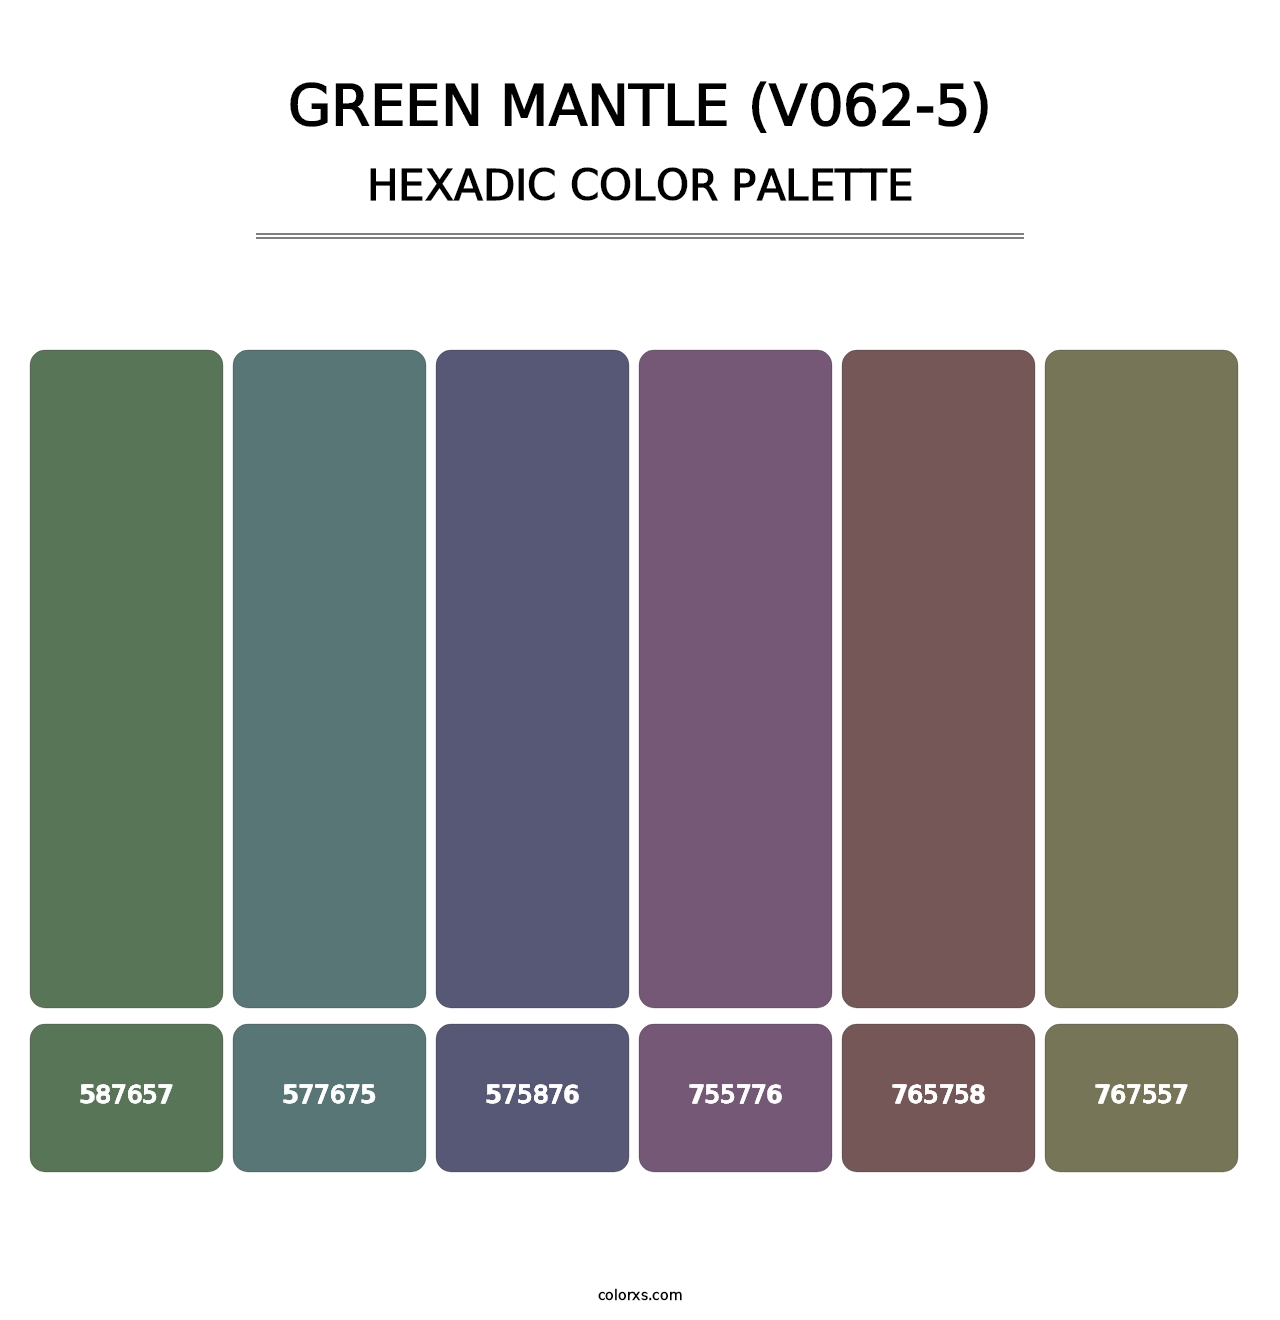 Green Mantle (V062-5) - Hexadic Color Palette